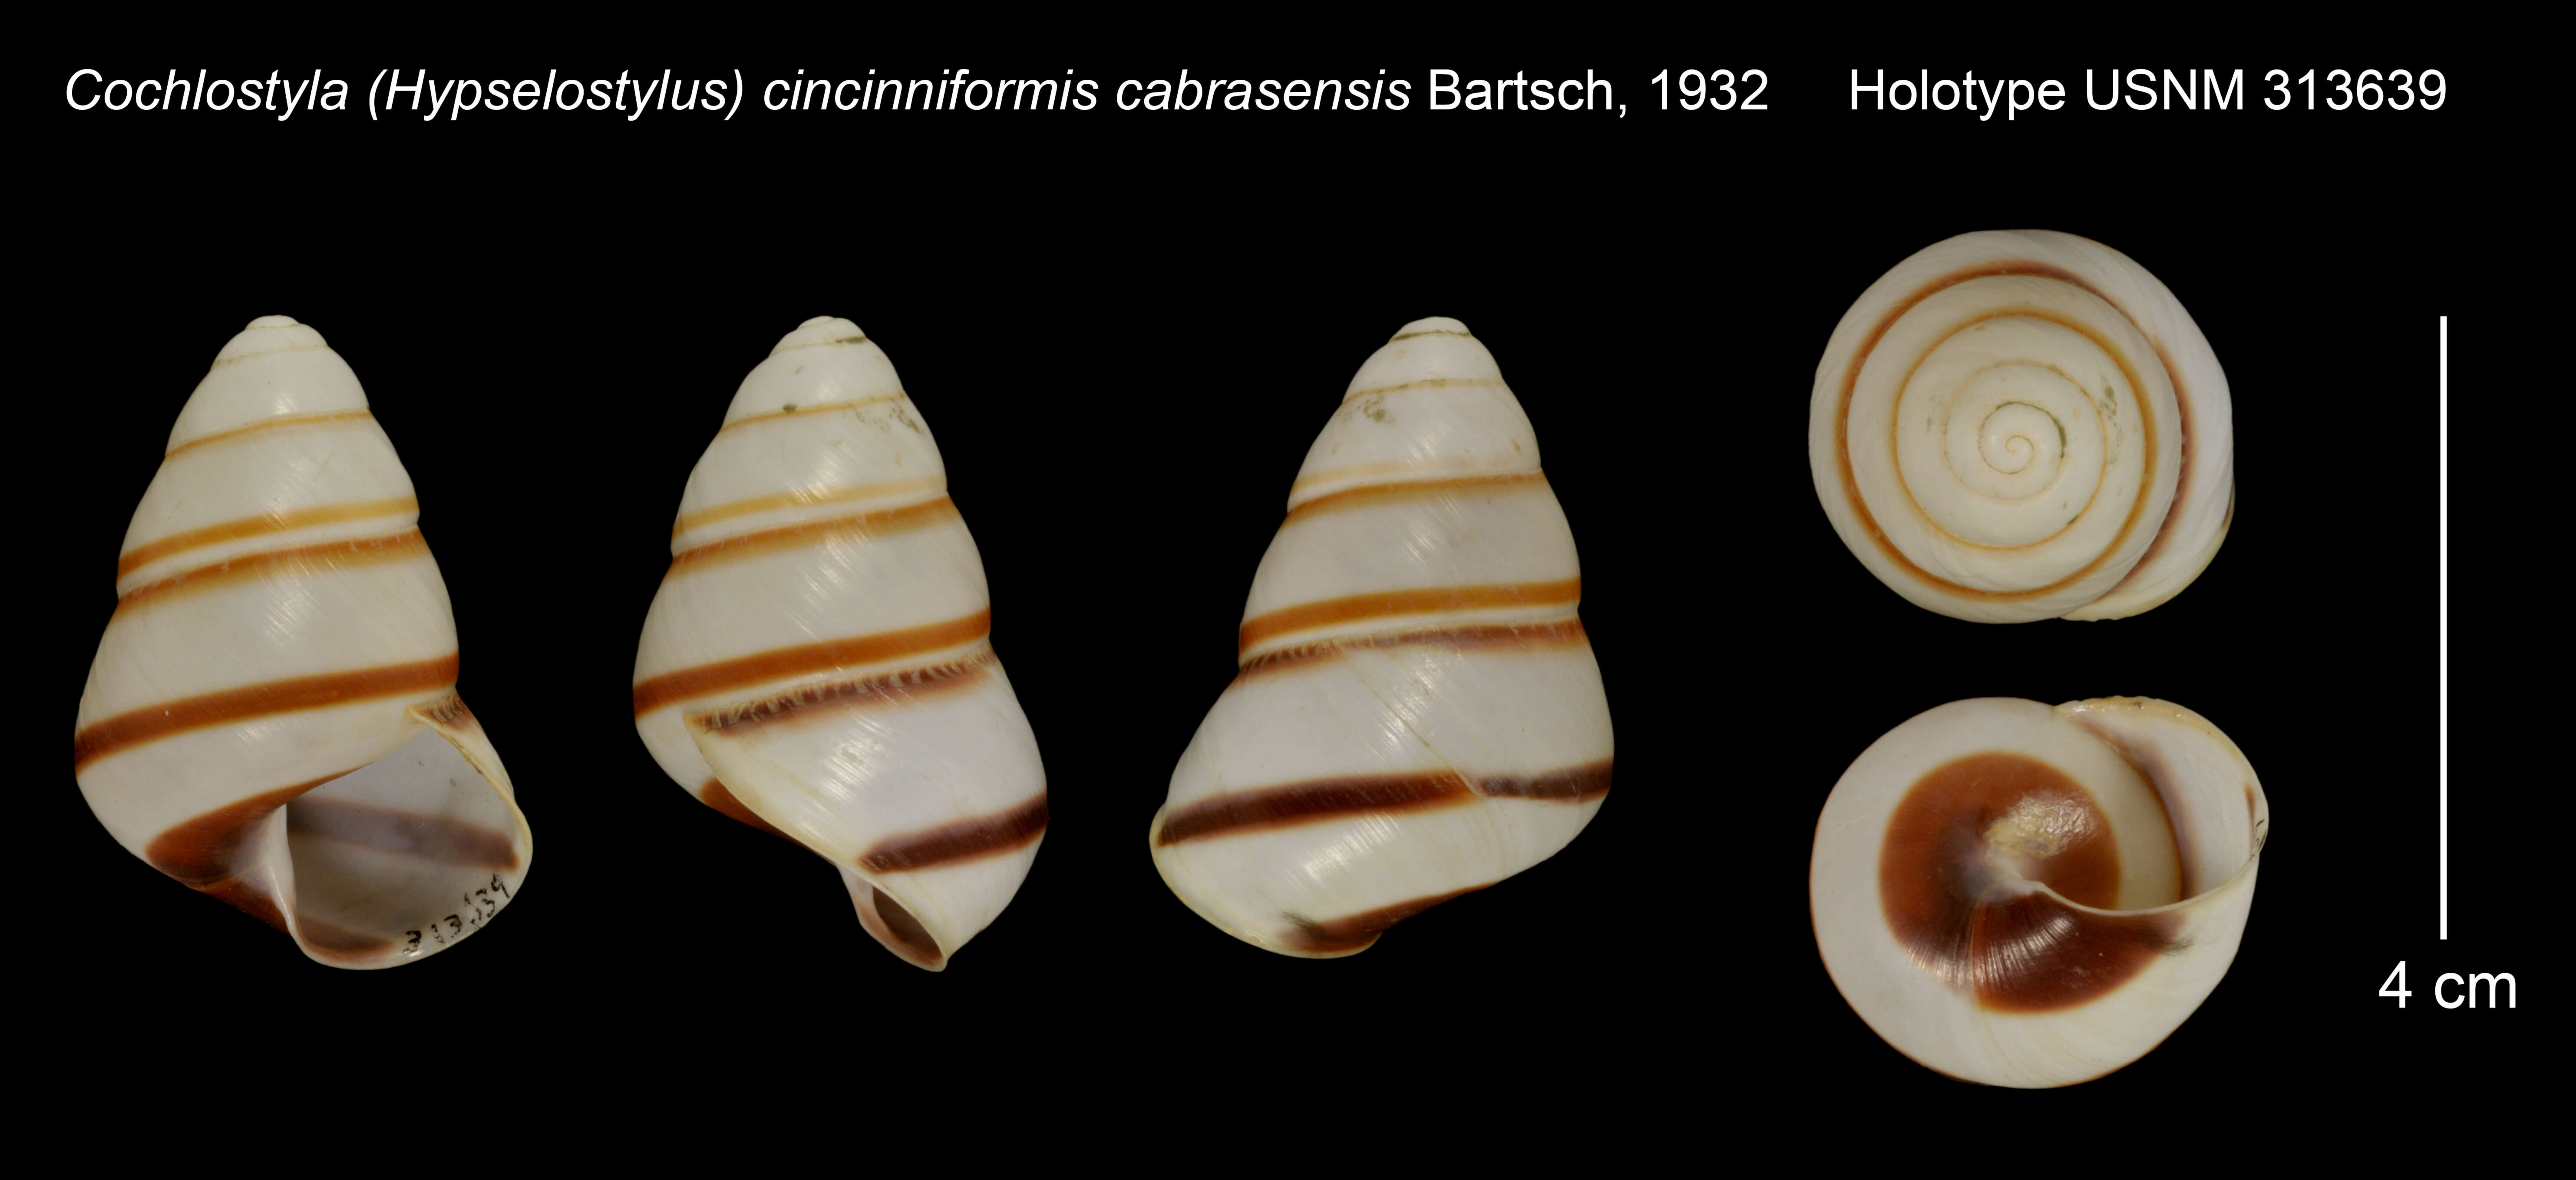 Image of Cochlostyla (Hypselostylus) cincinniformis cabrasensis Bartsch